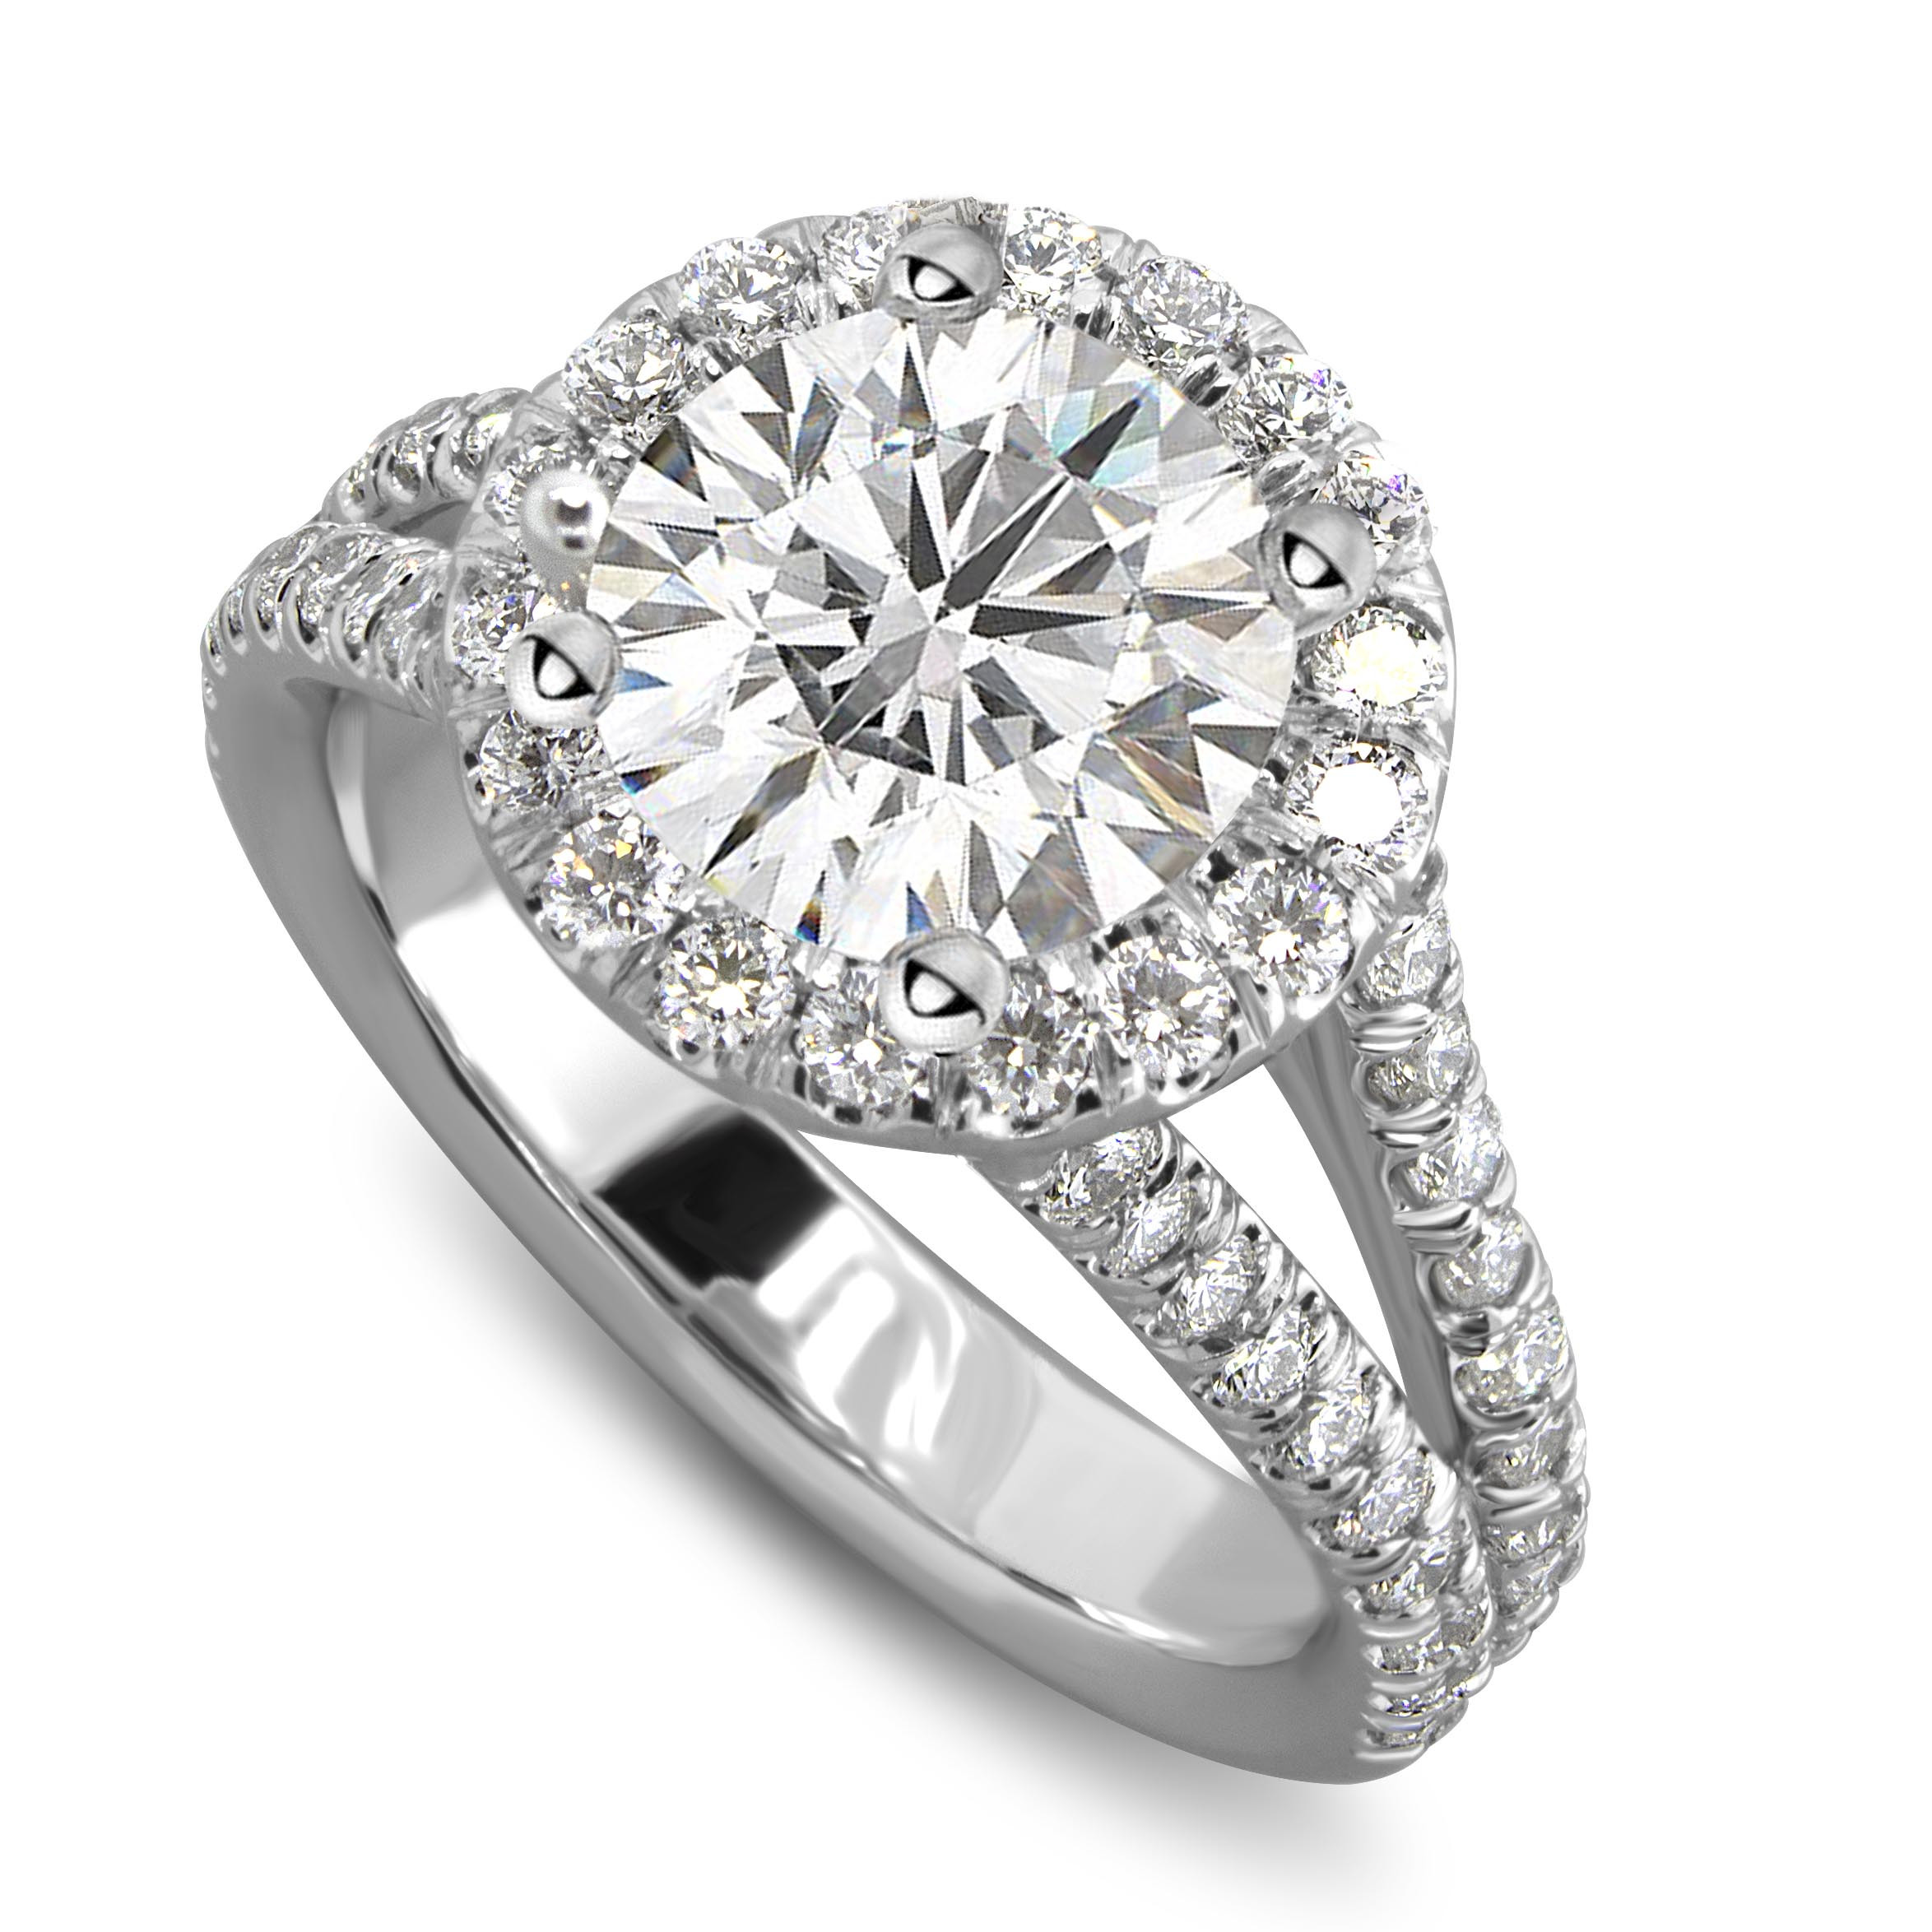 Round Halo Diamond Engagement Rings
 Split Shank Round Halo Diamond Engagement Ring 0 85 Carats